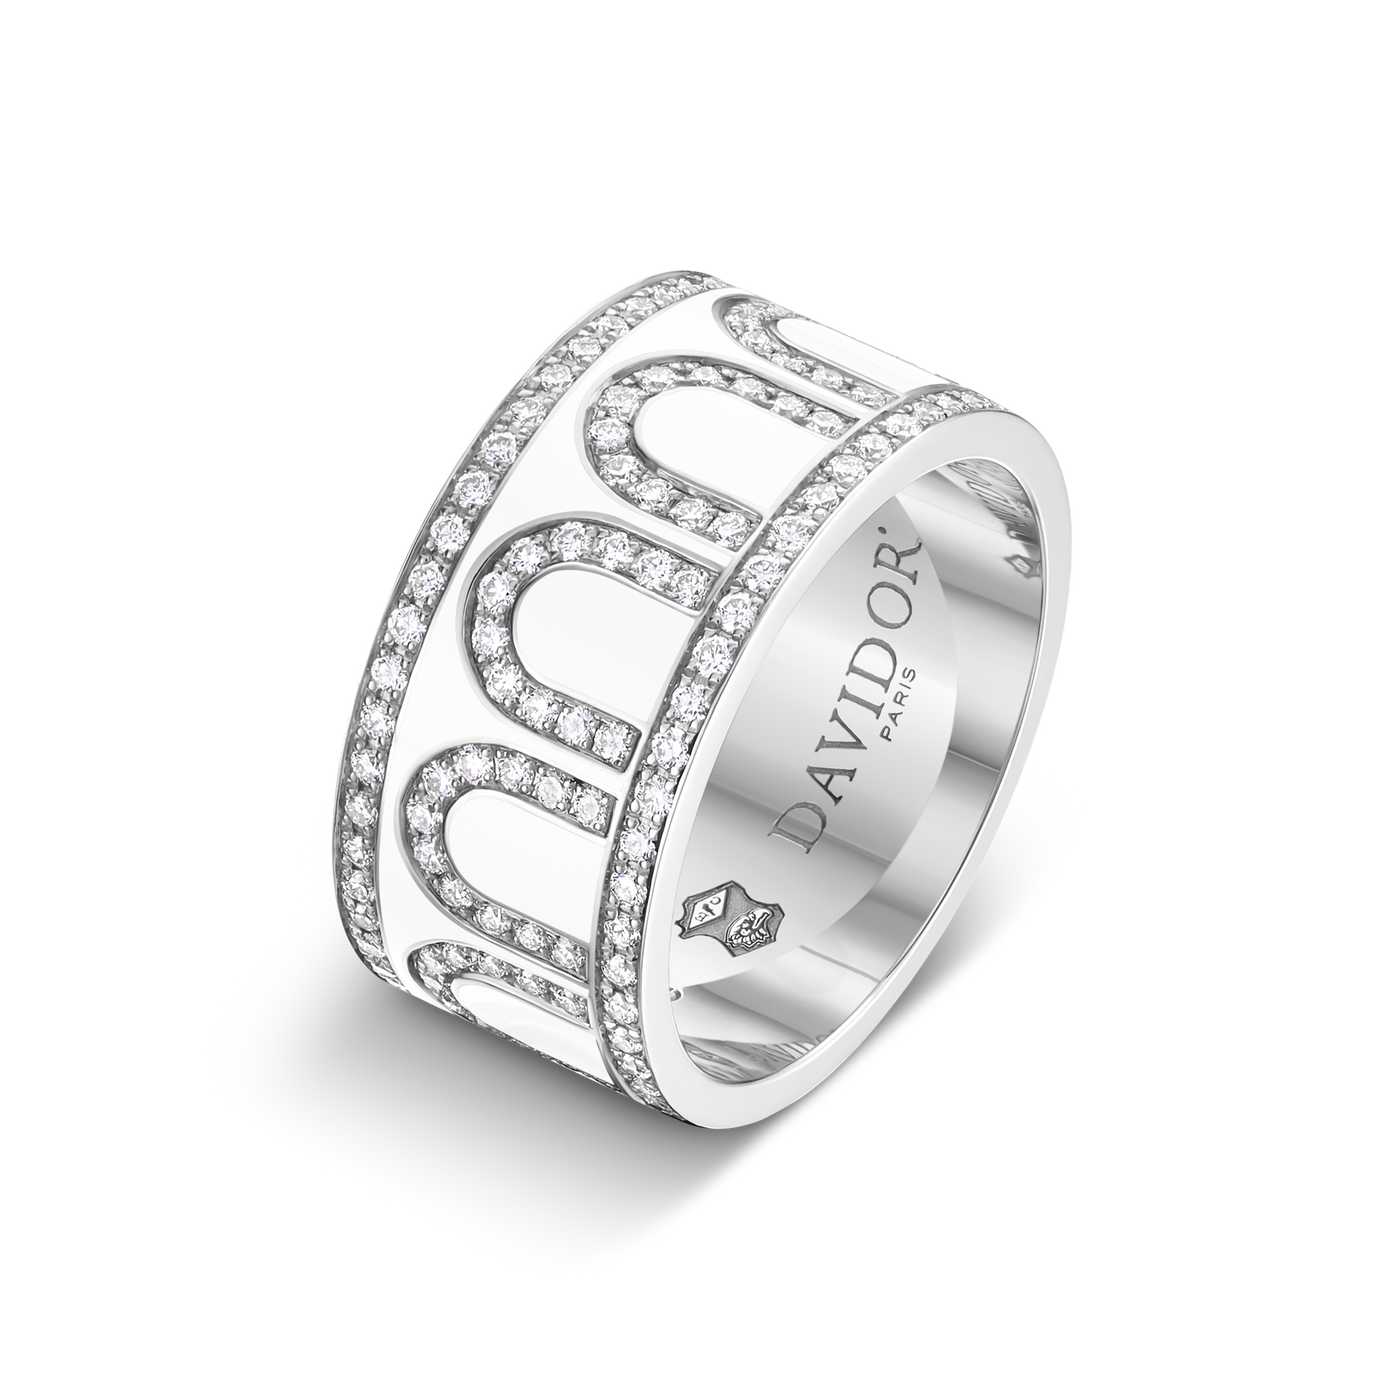 L'Arc de DAVIDOR Ring GM, 18k White Gold with Neige Lacquered Ceramic and Palais Diamonds - DAVIDOR